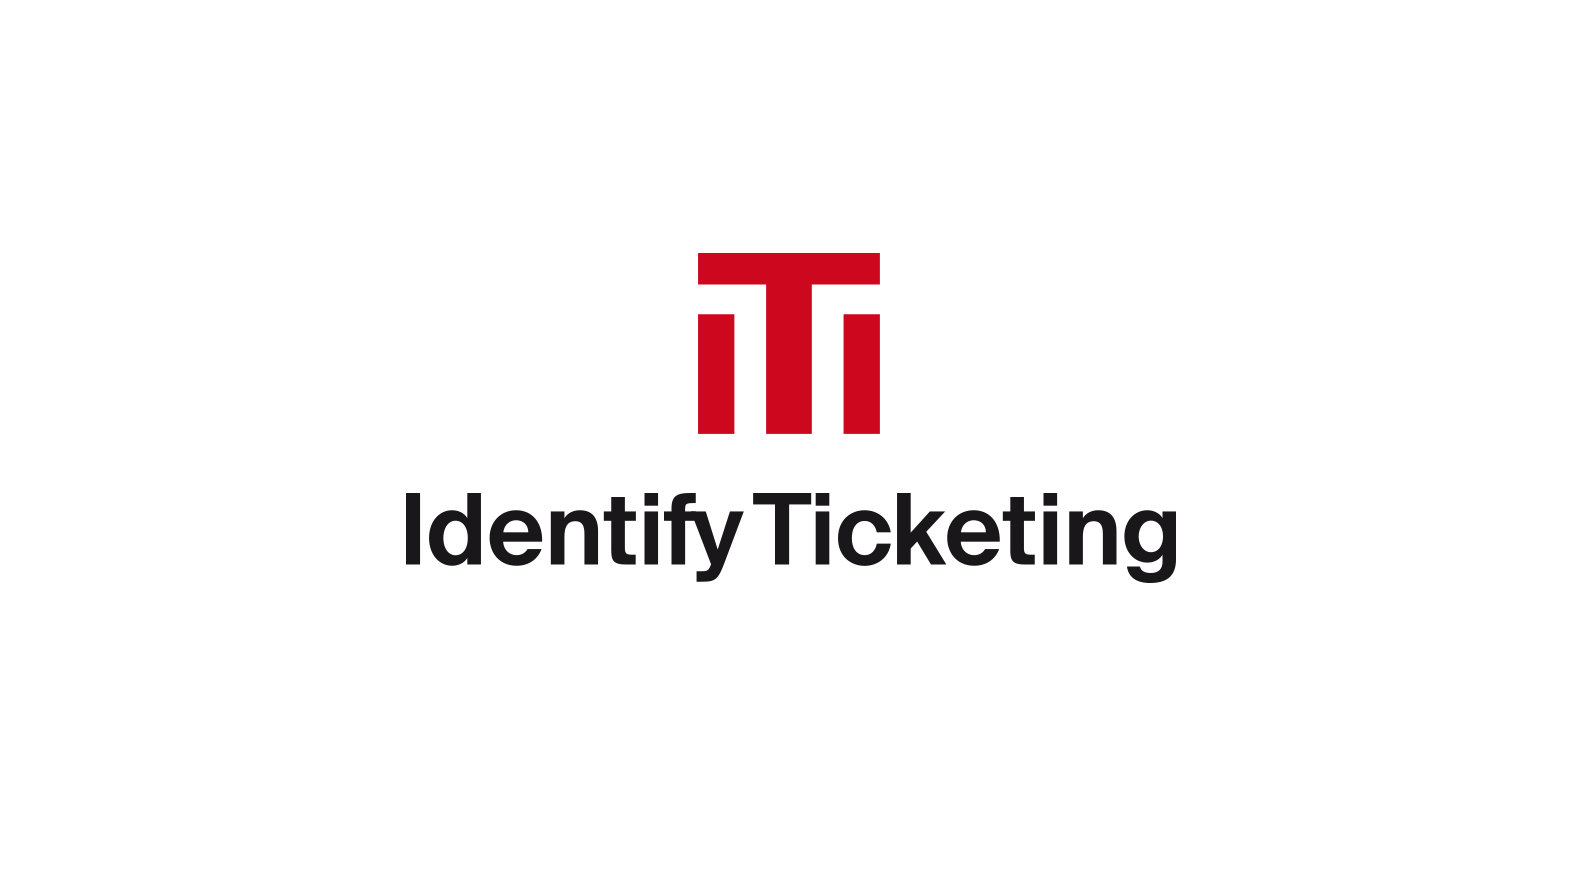 Identify Ticketing, London